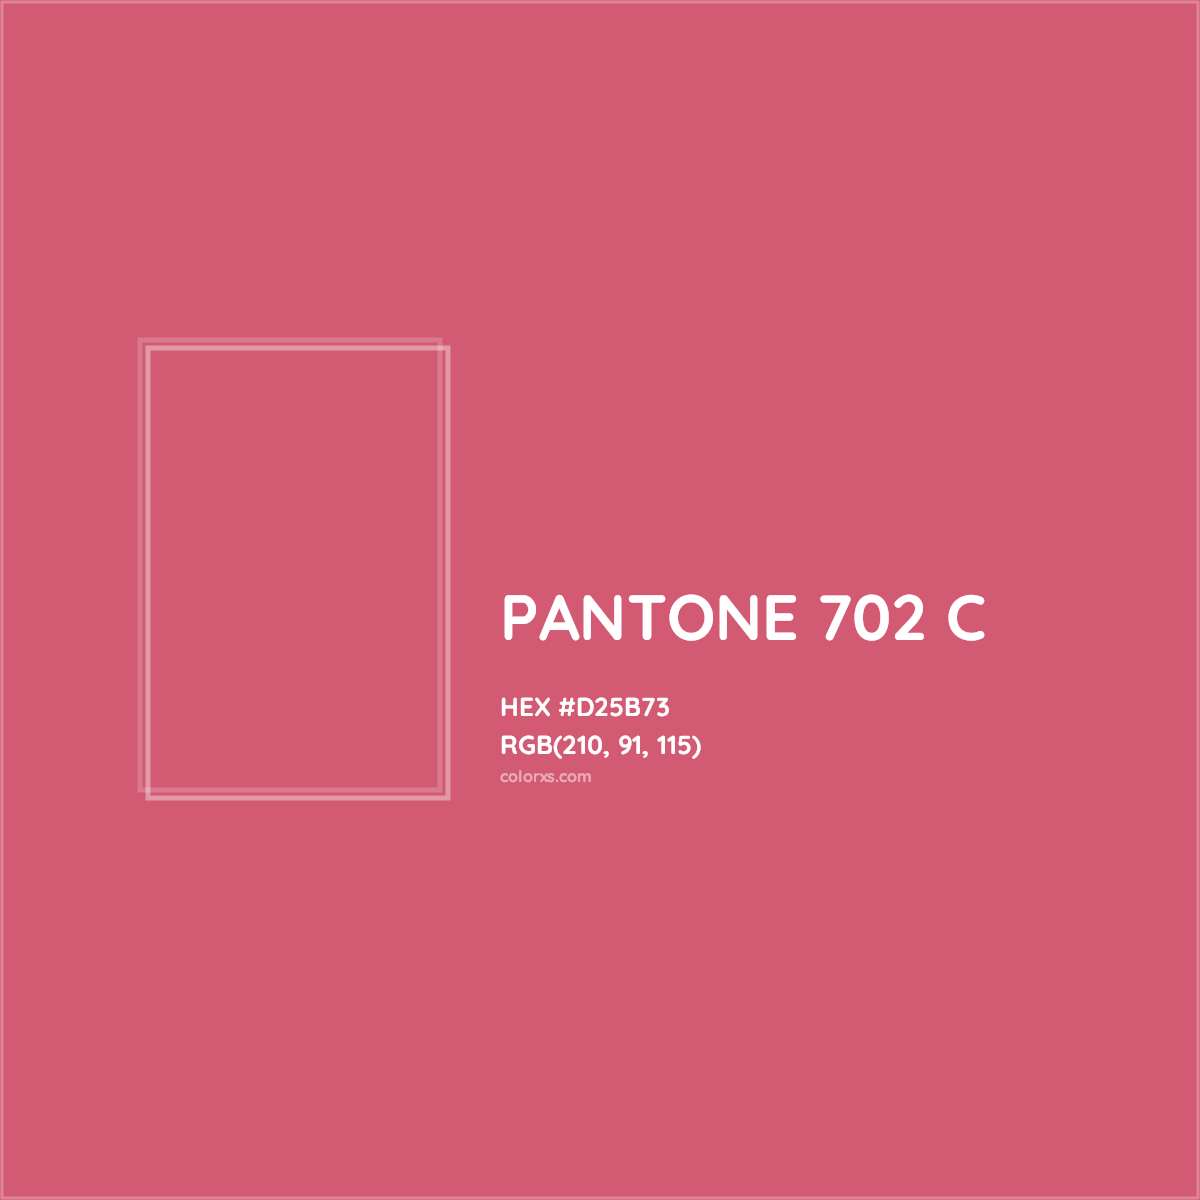 HEX #D25B73 PANTONE 702 C CMS Pantone PMS - Color Code